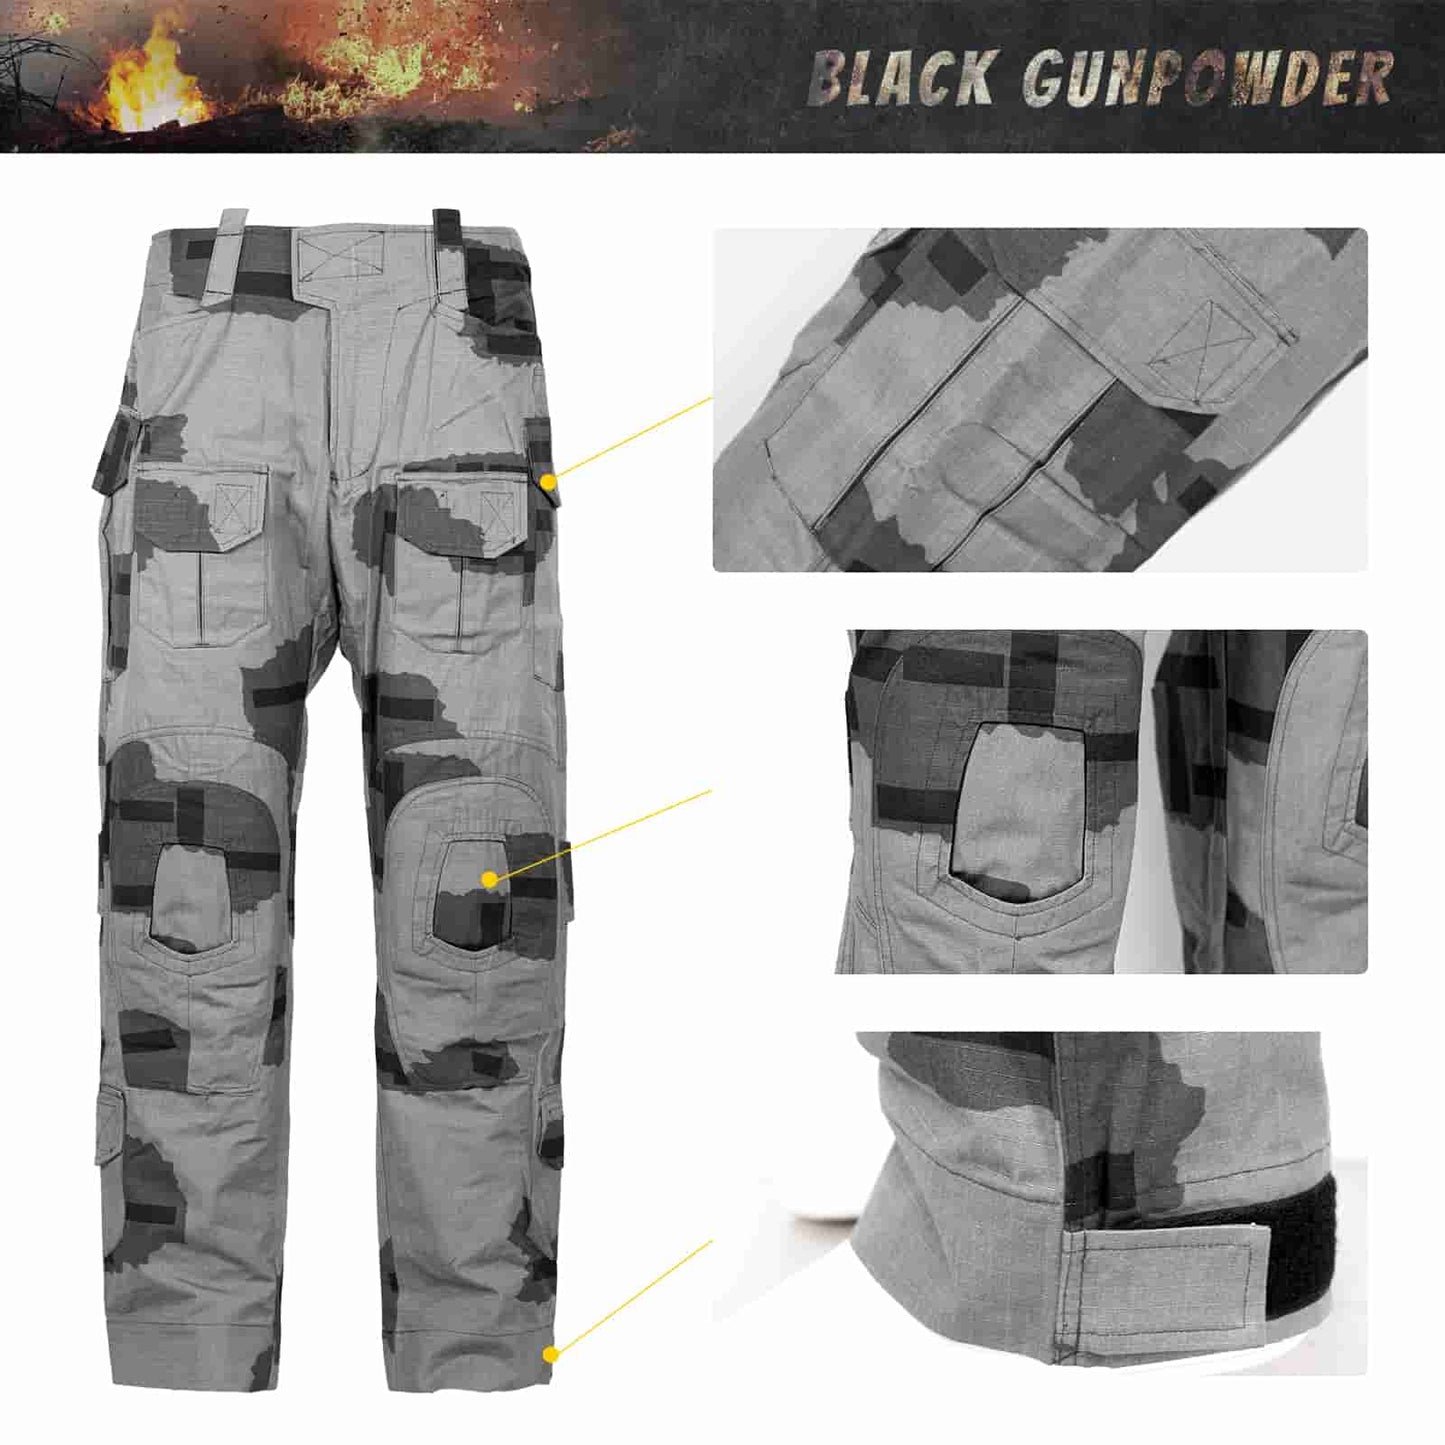 Black Gunpowder G3 Tactical Combat Pants Military Paintball Airsoft Hunting Hiking Outdoor